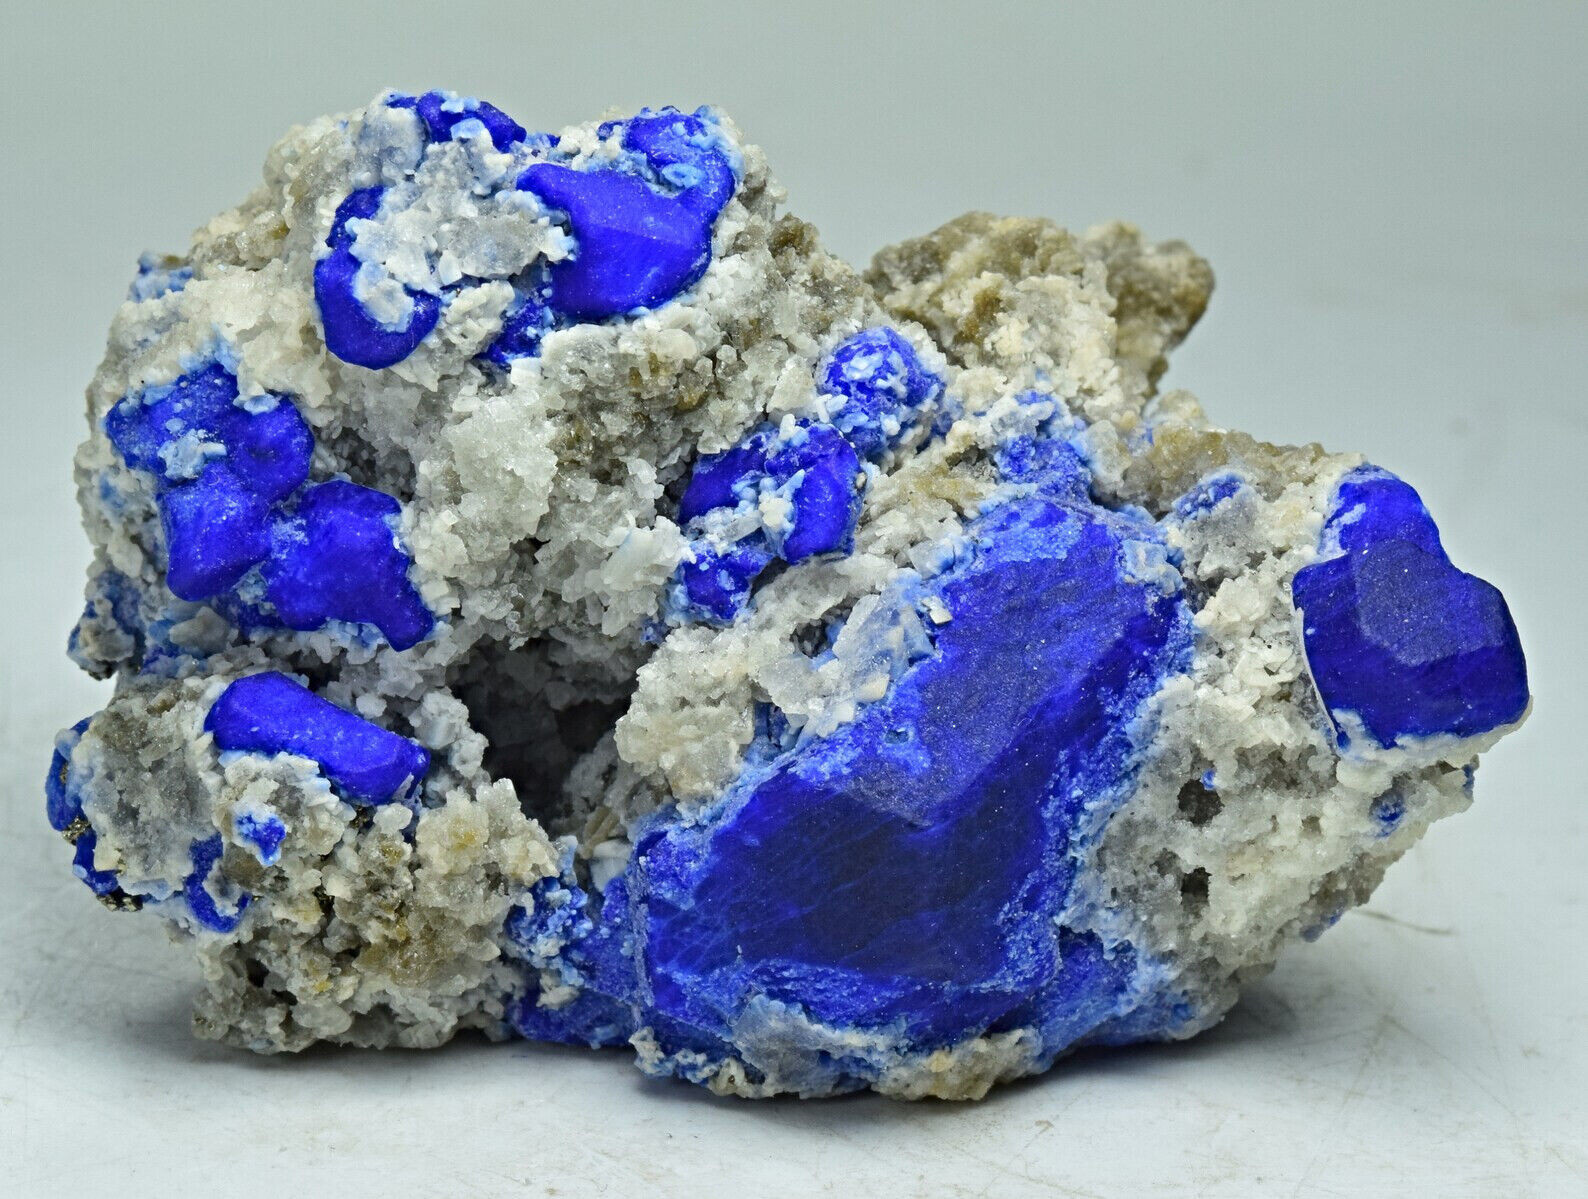 Lovely Royal Blue Color Lazurite Crystal Specimen with Fluorescent Forsterite